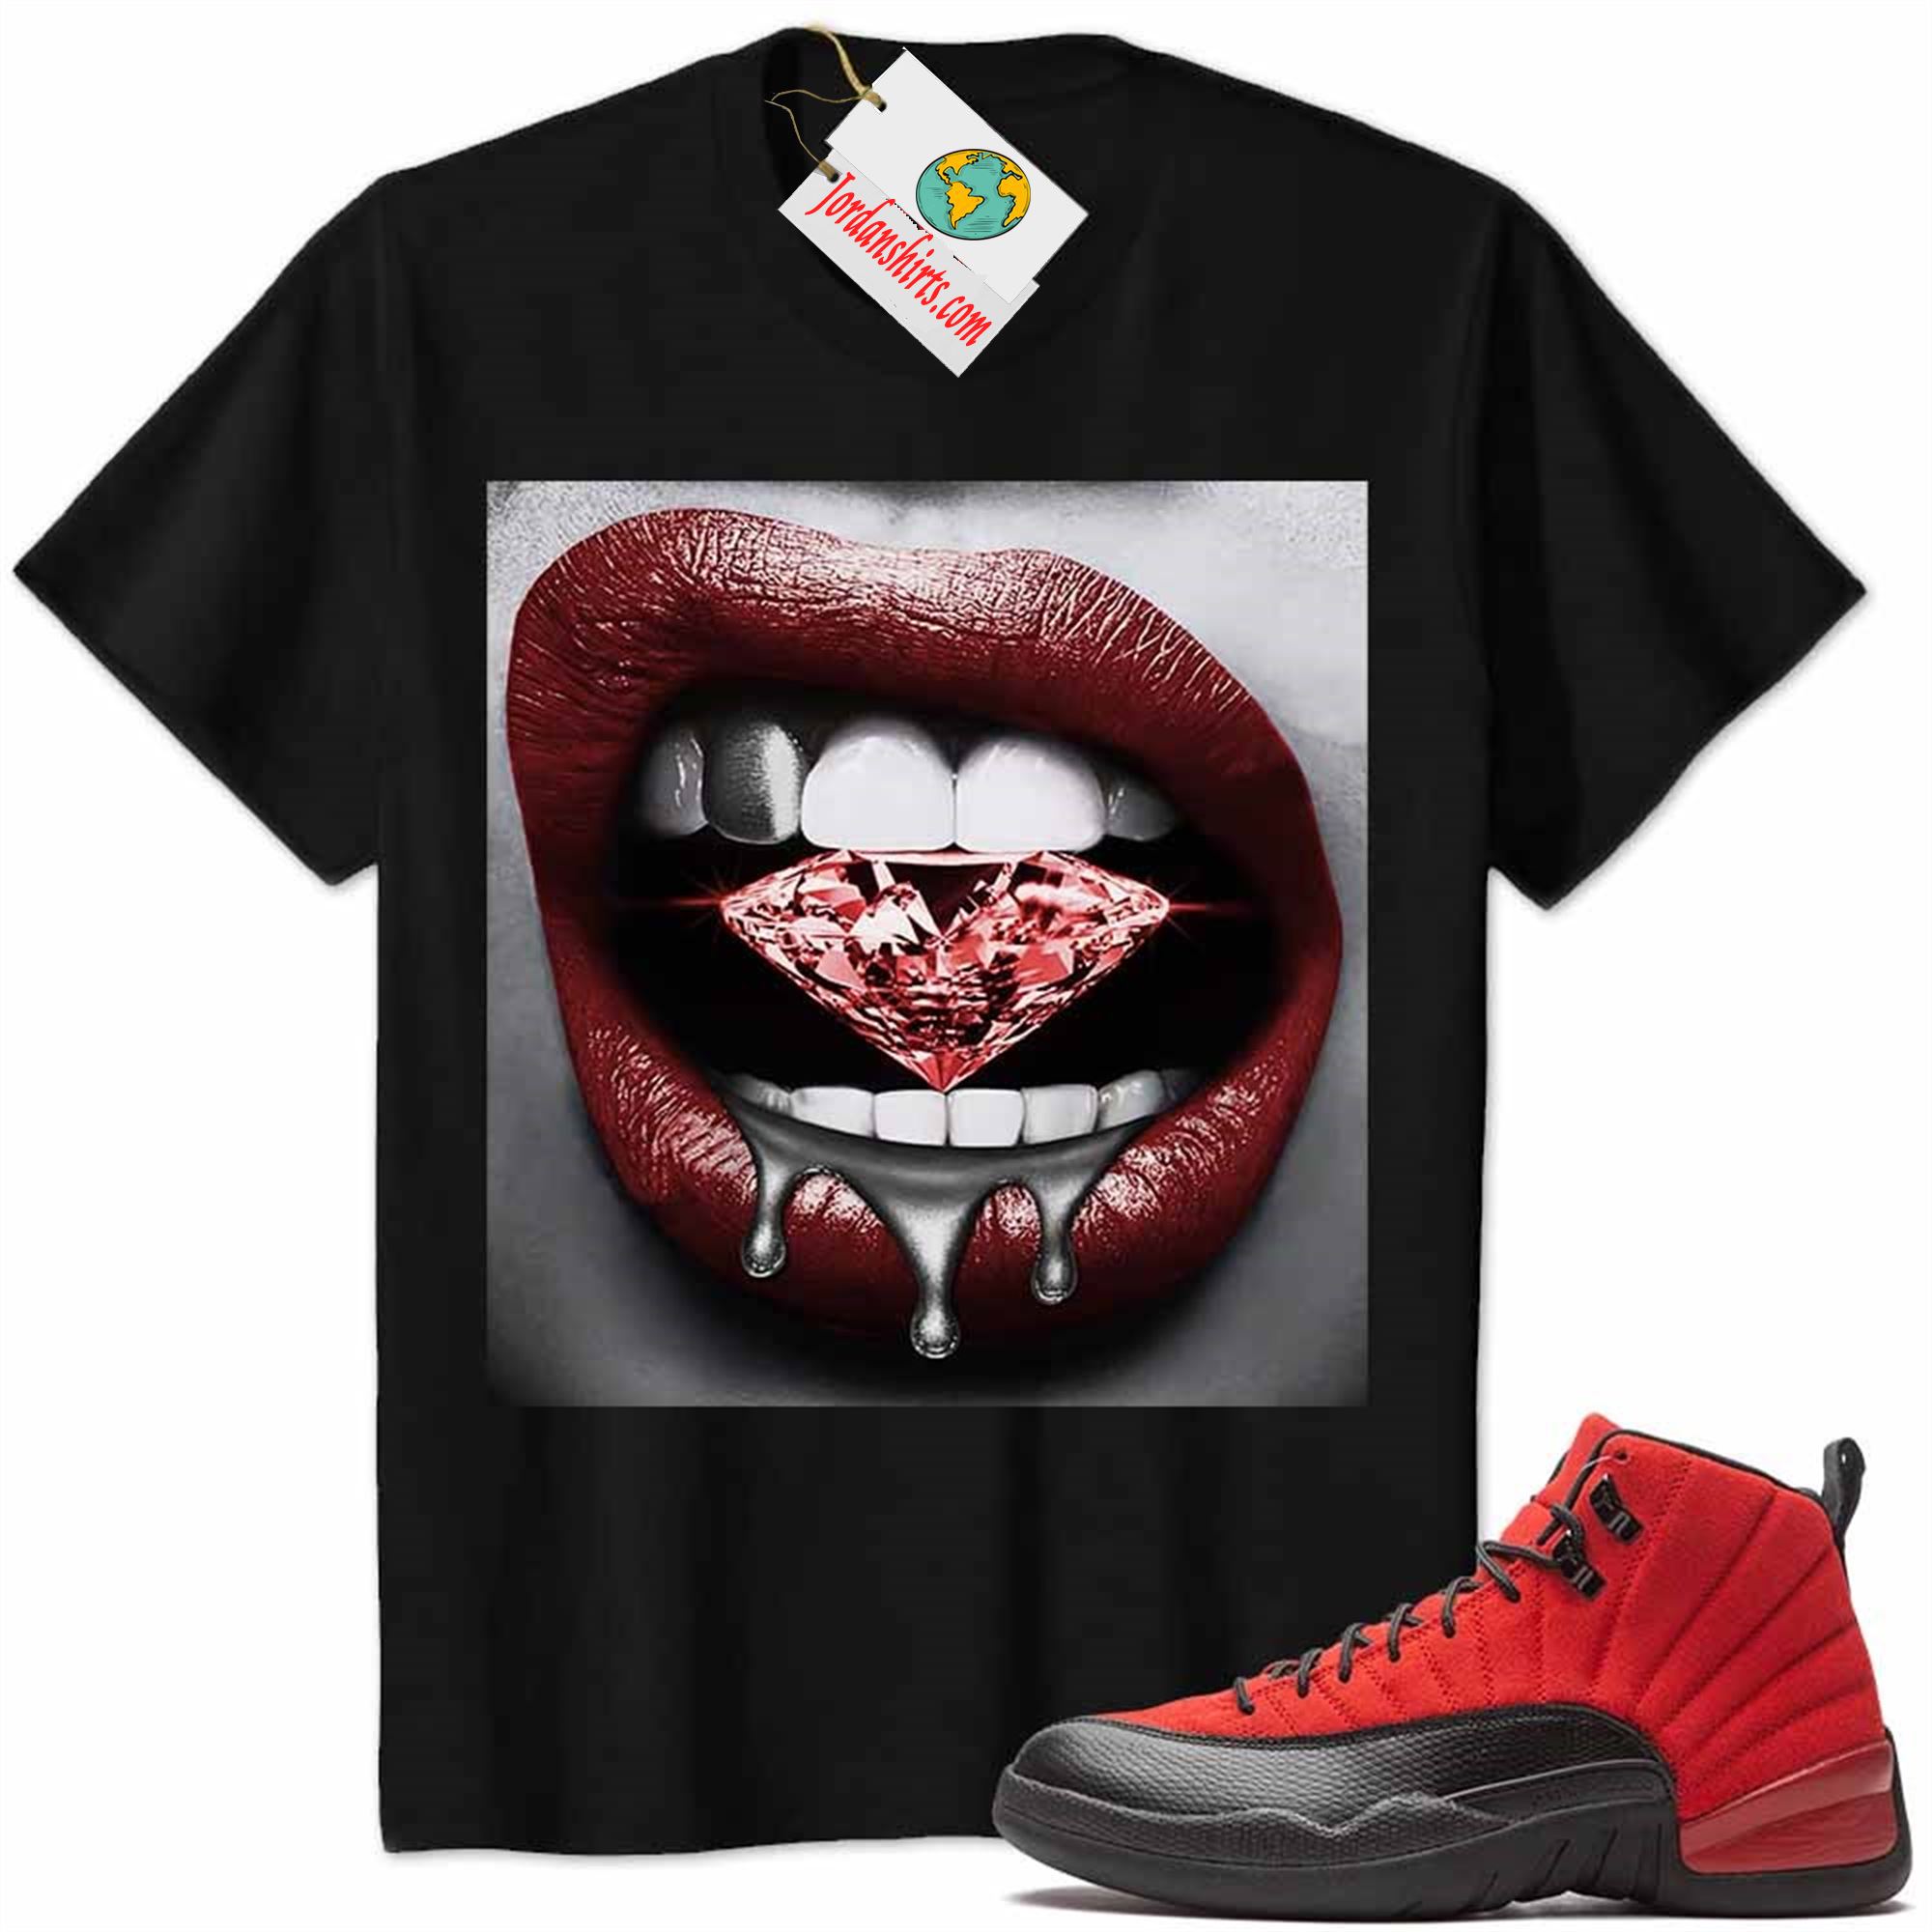 Jordan 12 Shirt, Jordan 12 Reverse Flu Game Shirt Sexy Lip Bite Diamond Dripping Black Full Size Up To 5xl